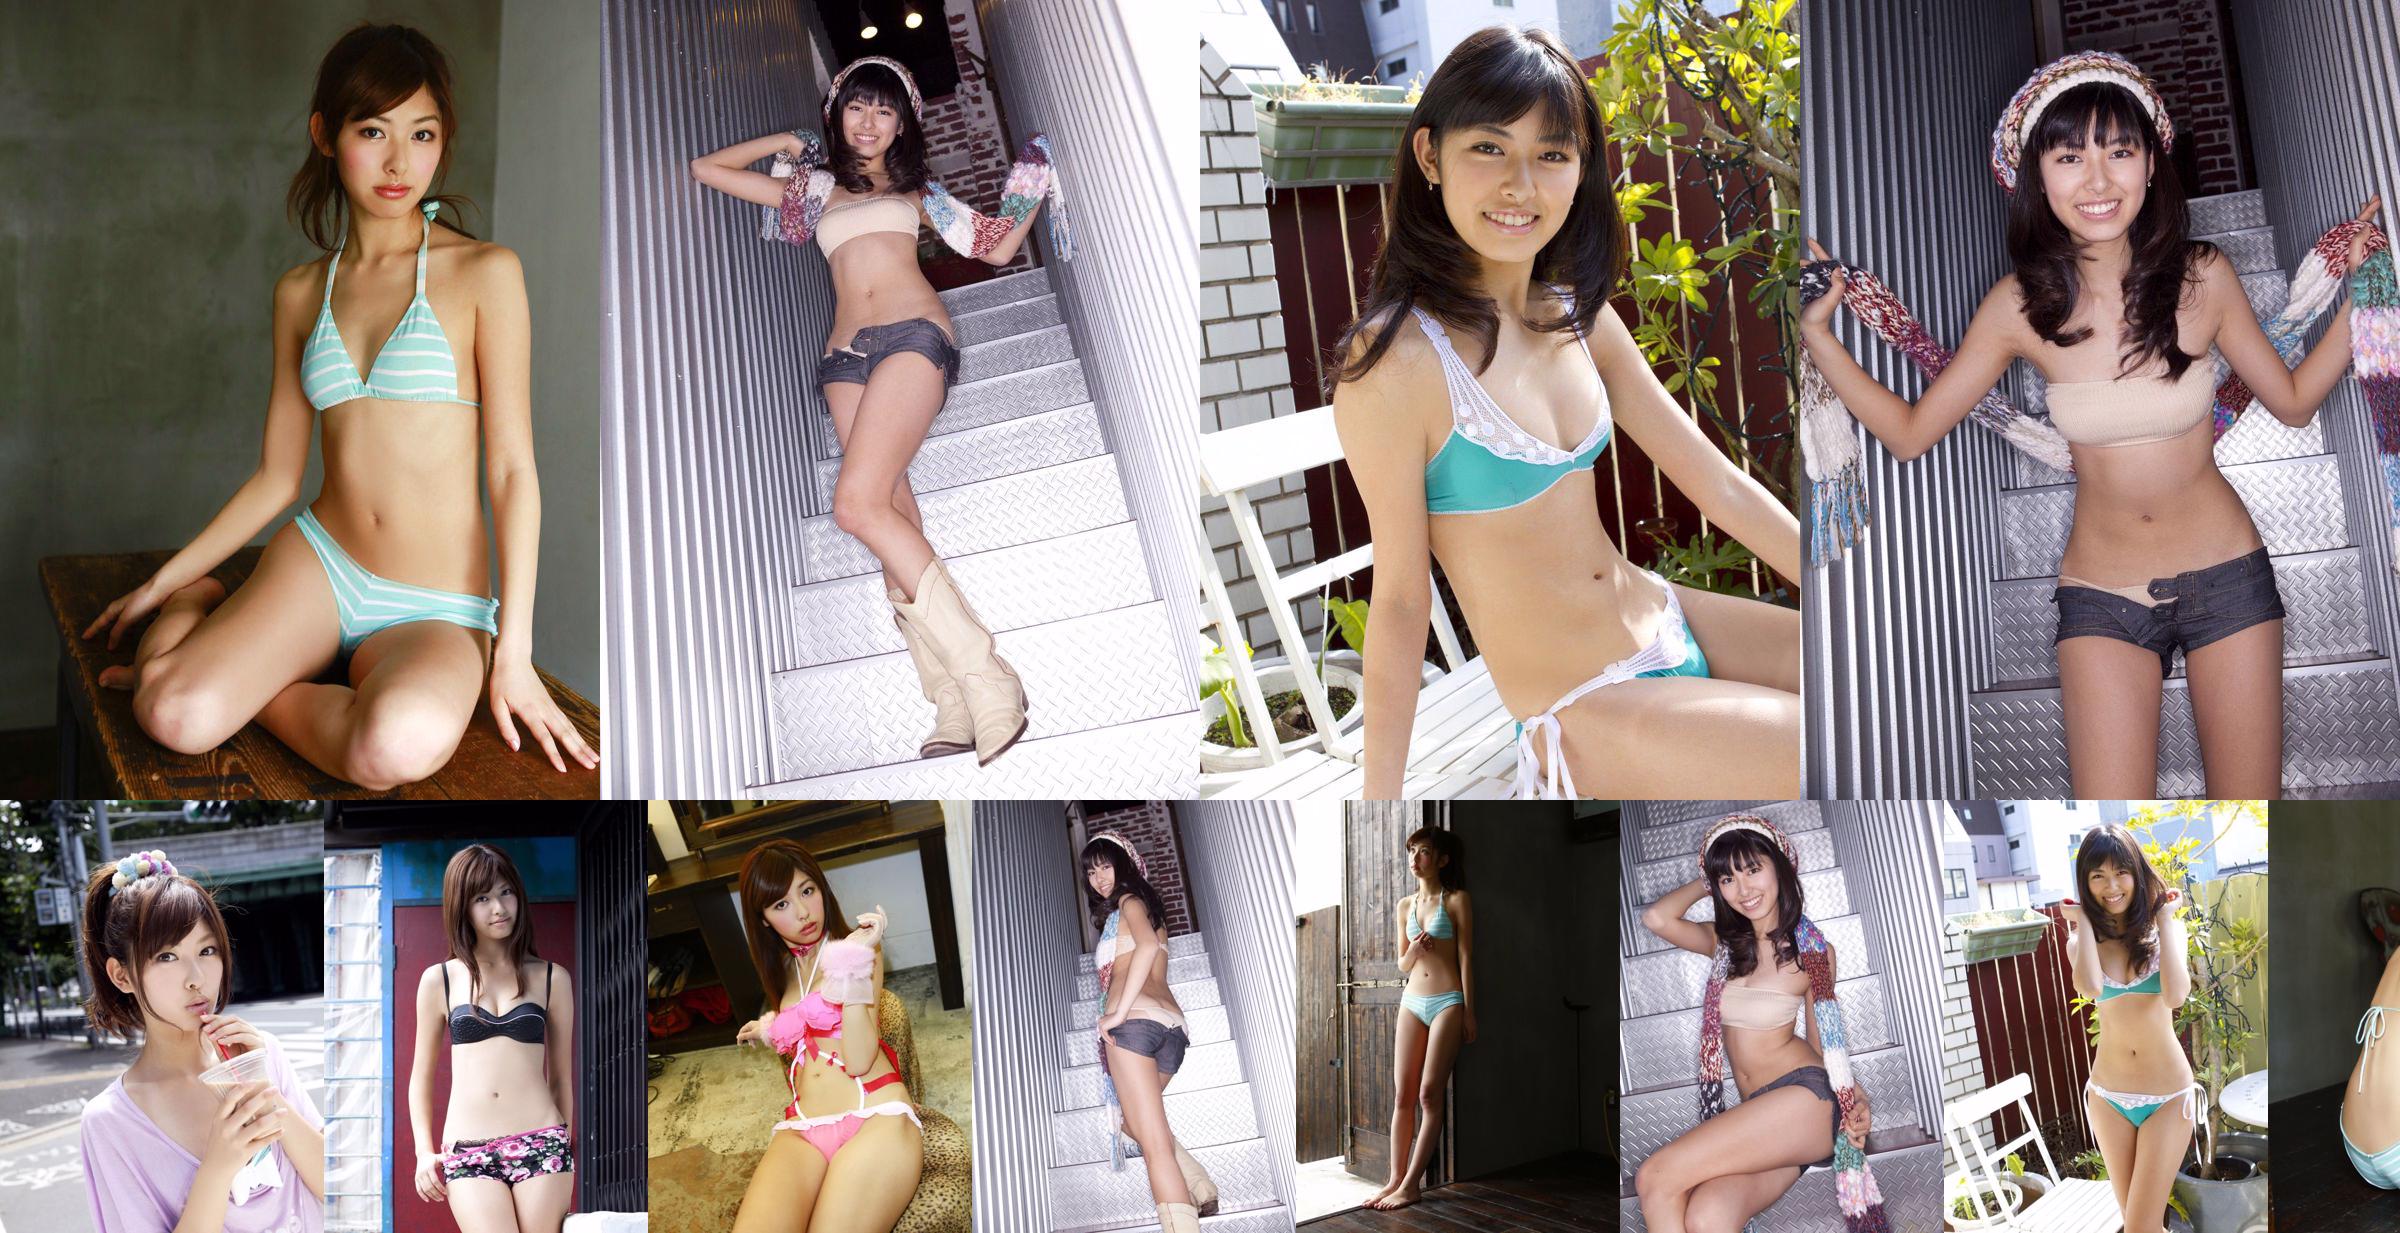 Yurika Tachibana / Yurika Tachibana "Be a Babe" [Sabra.net] Strictly Girls No.77b34c Pagina 1